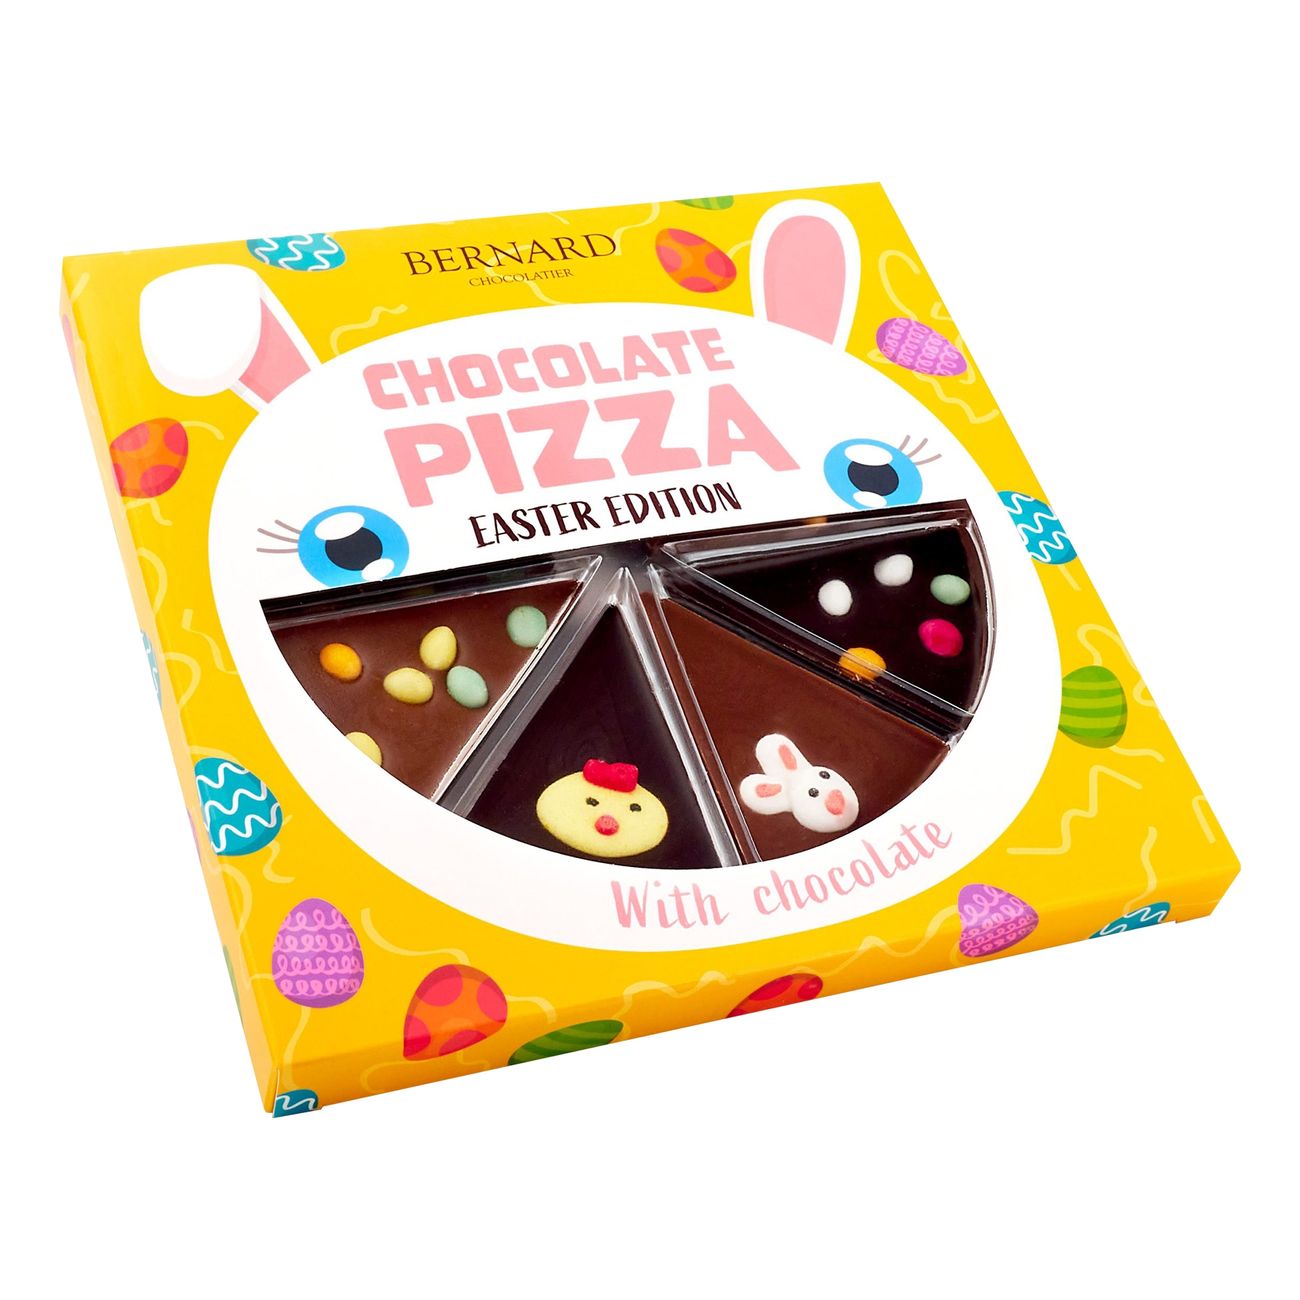 bernard-choc-pizza-easter-edition-1-x-10-gul-100942-1